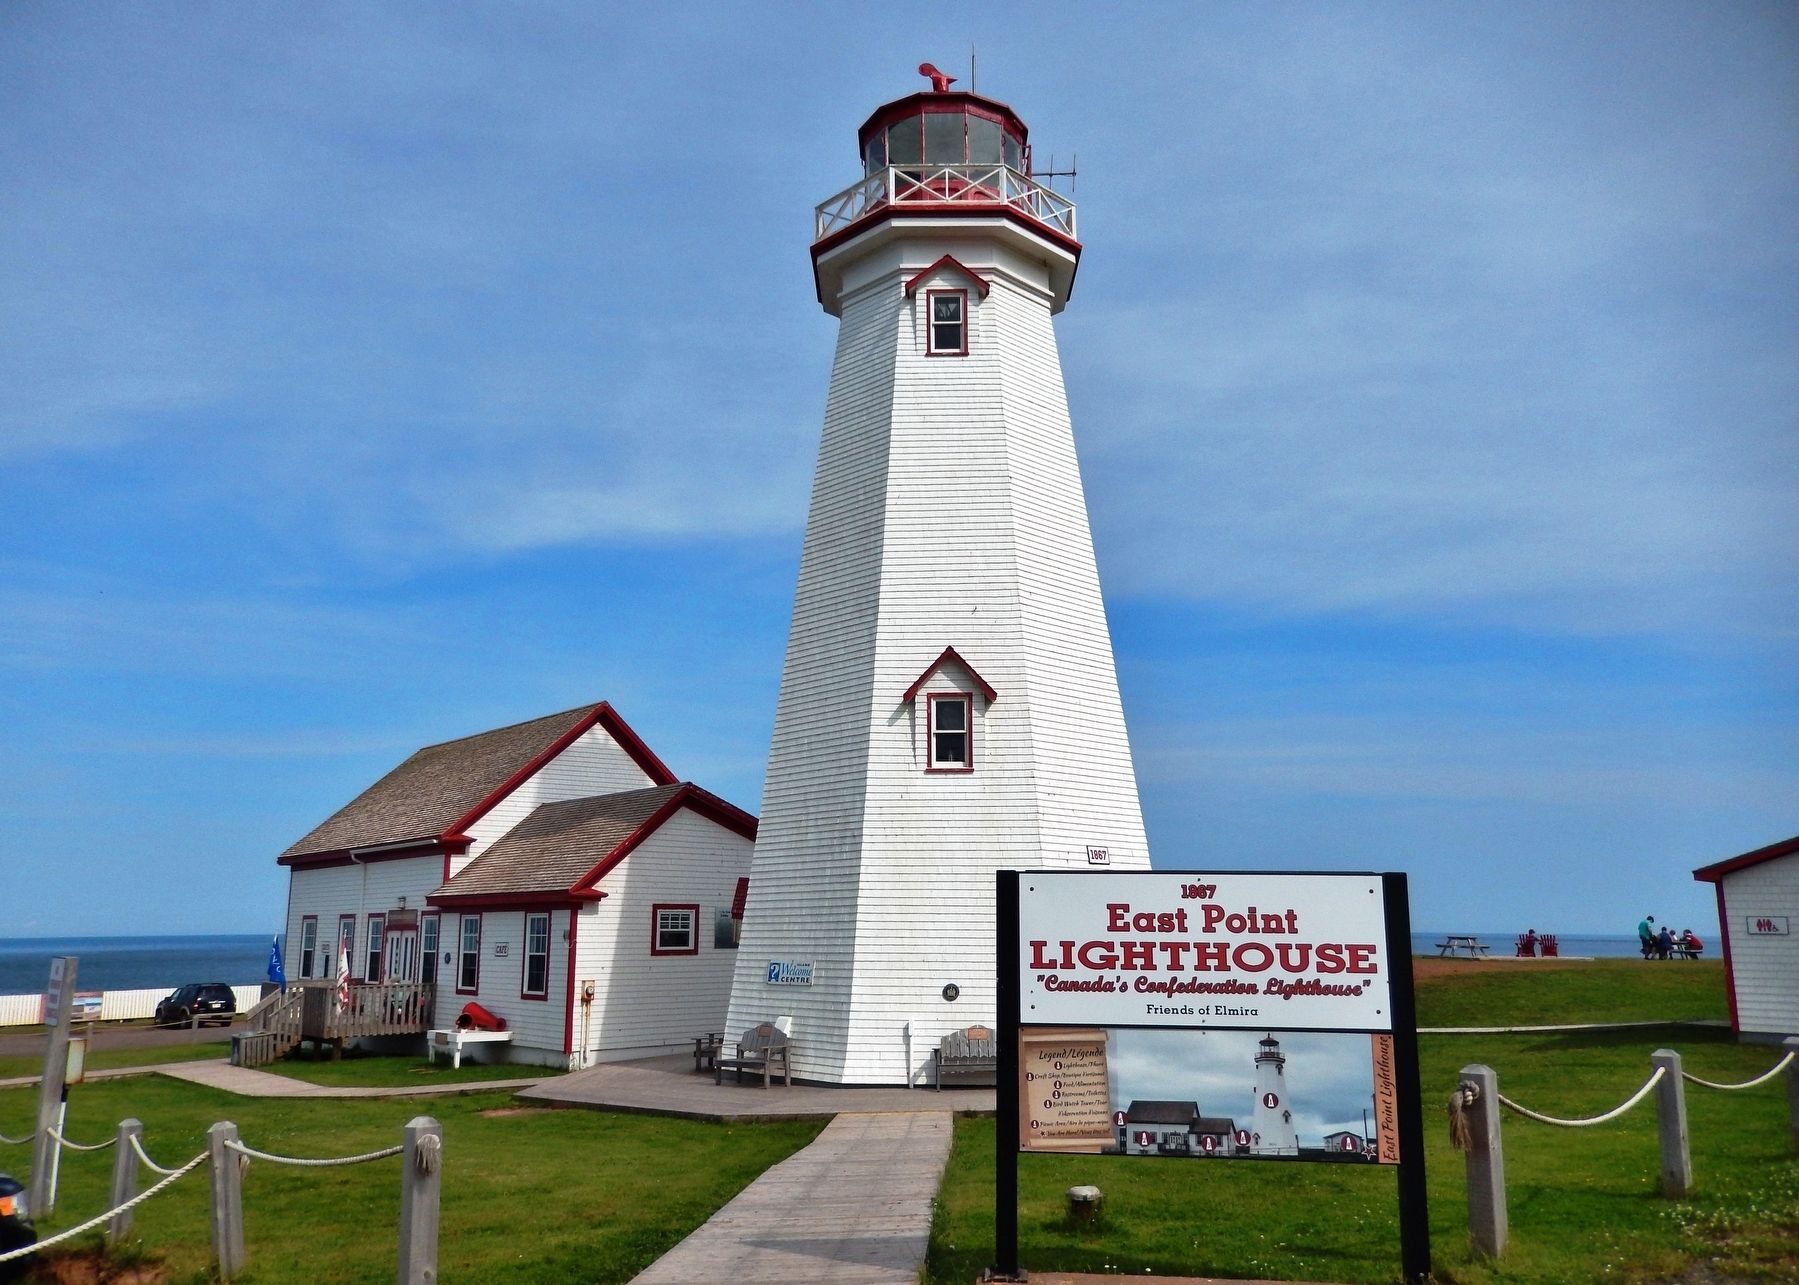 East Point Lighthouse (<i>northwest corner view</i>) image. Click for full size.